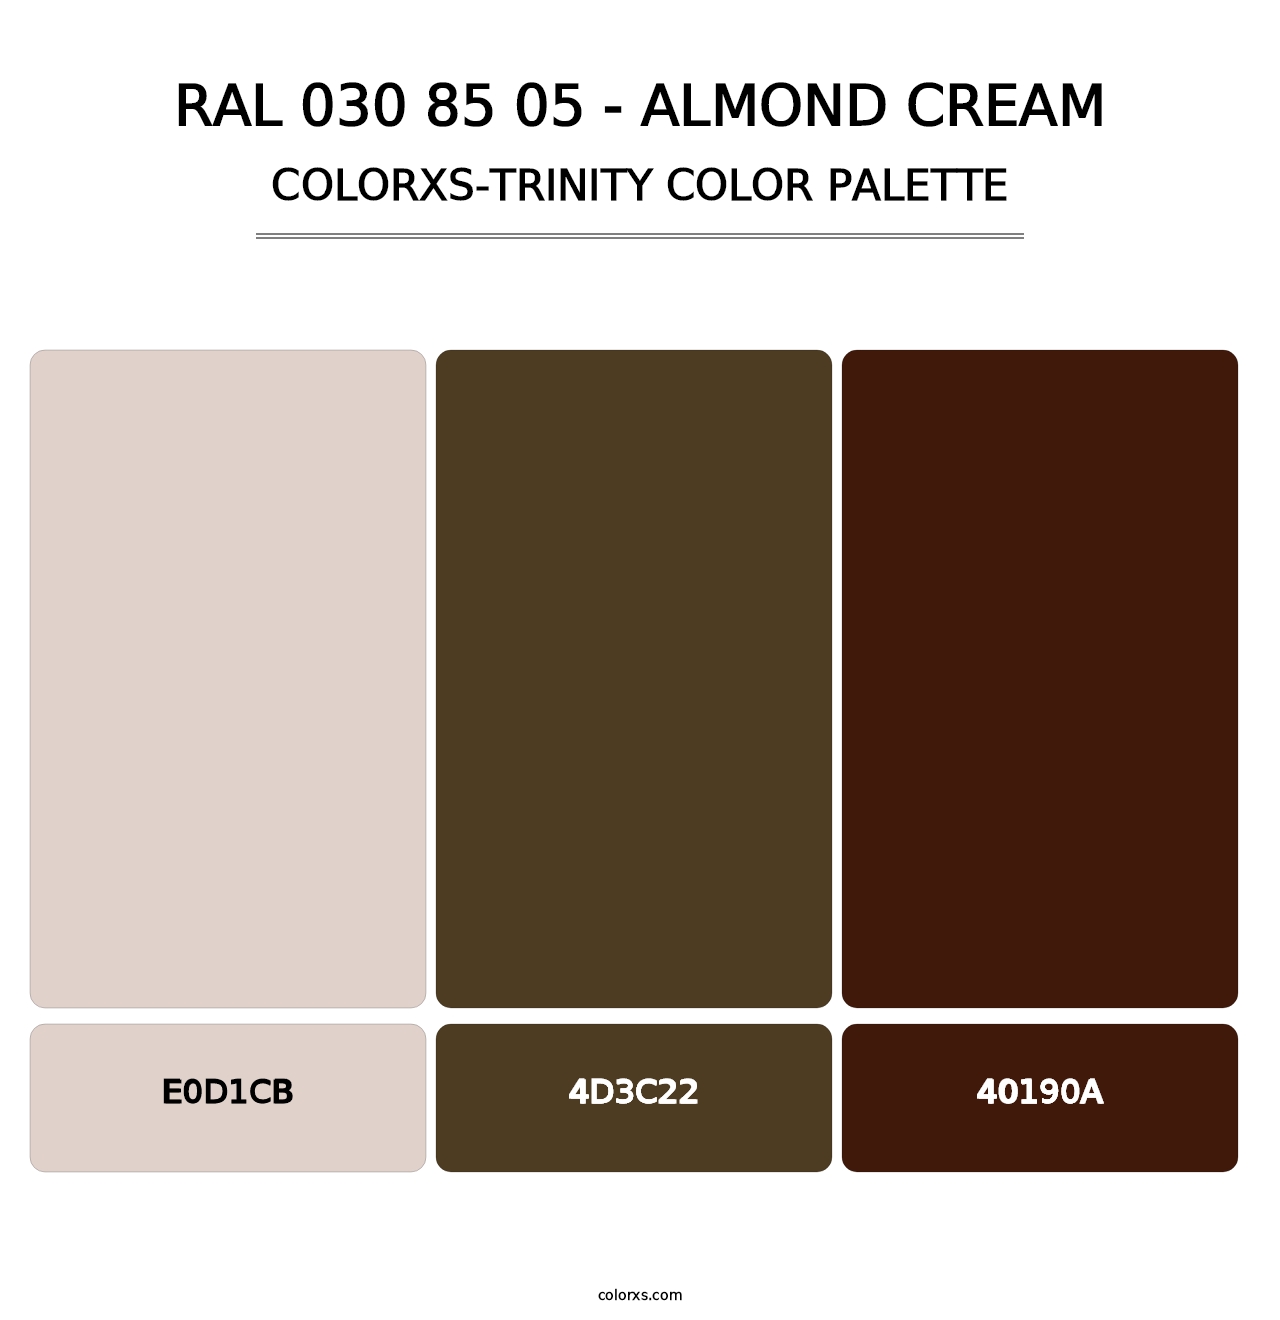 RAL 030 85 05 - Almond Cream - Colorxs Trinity Palette